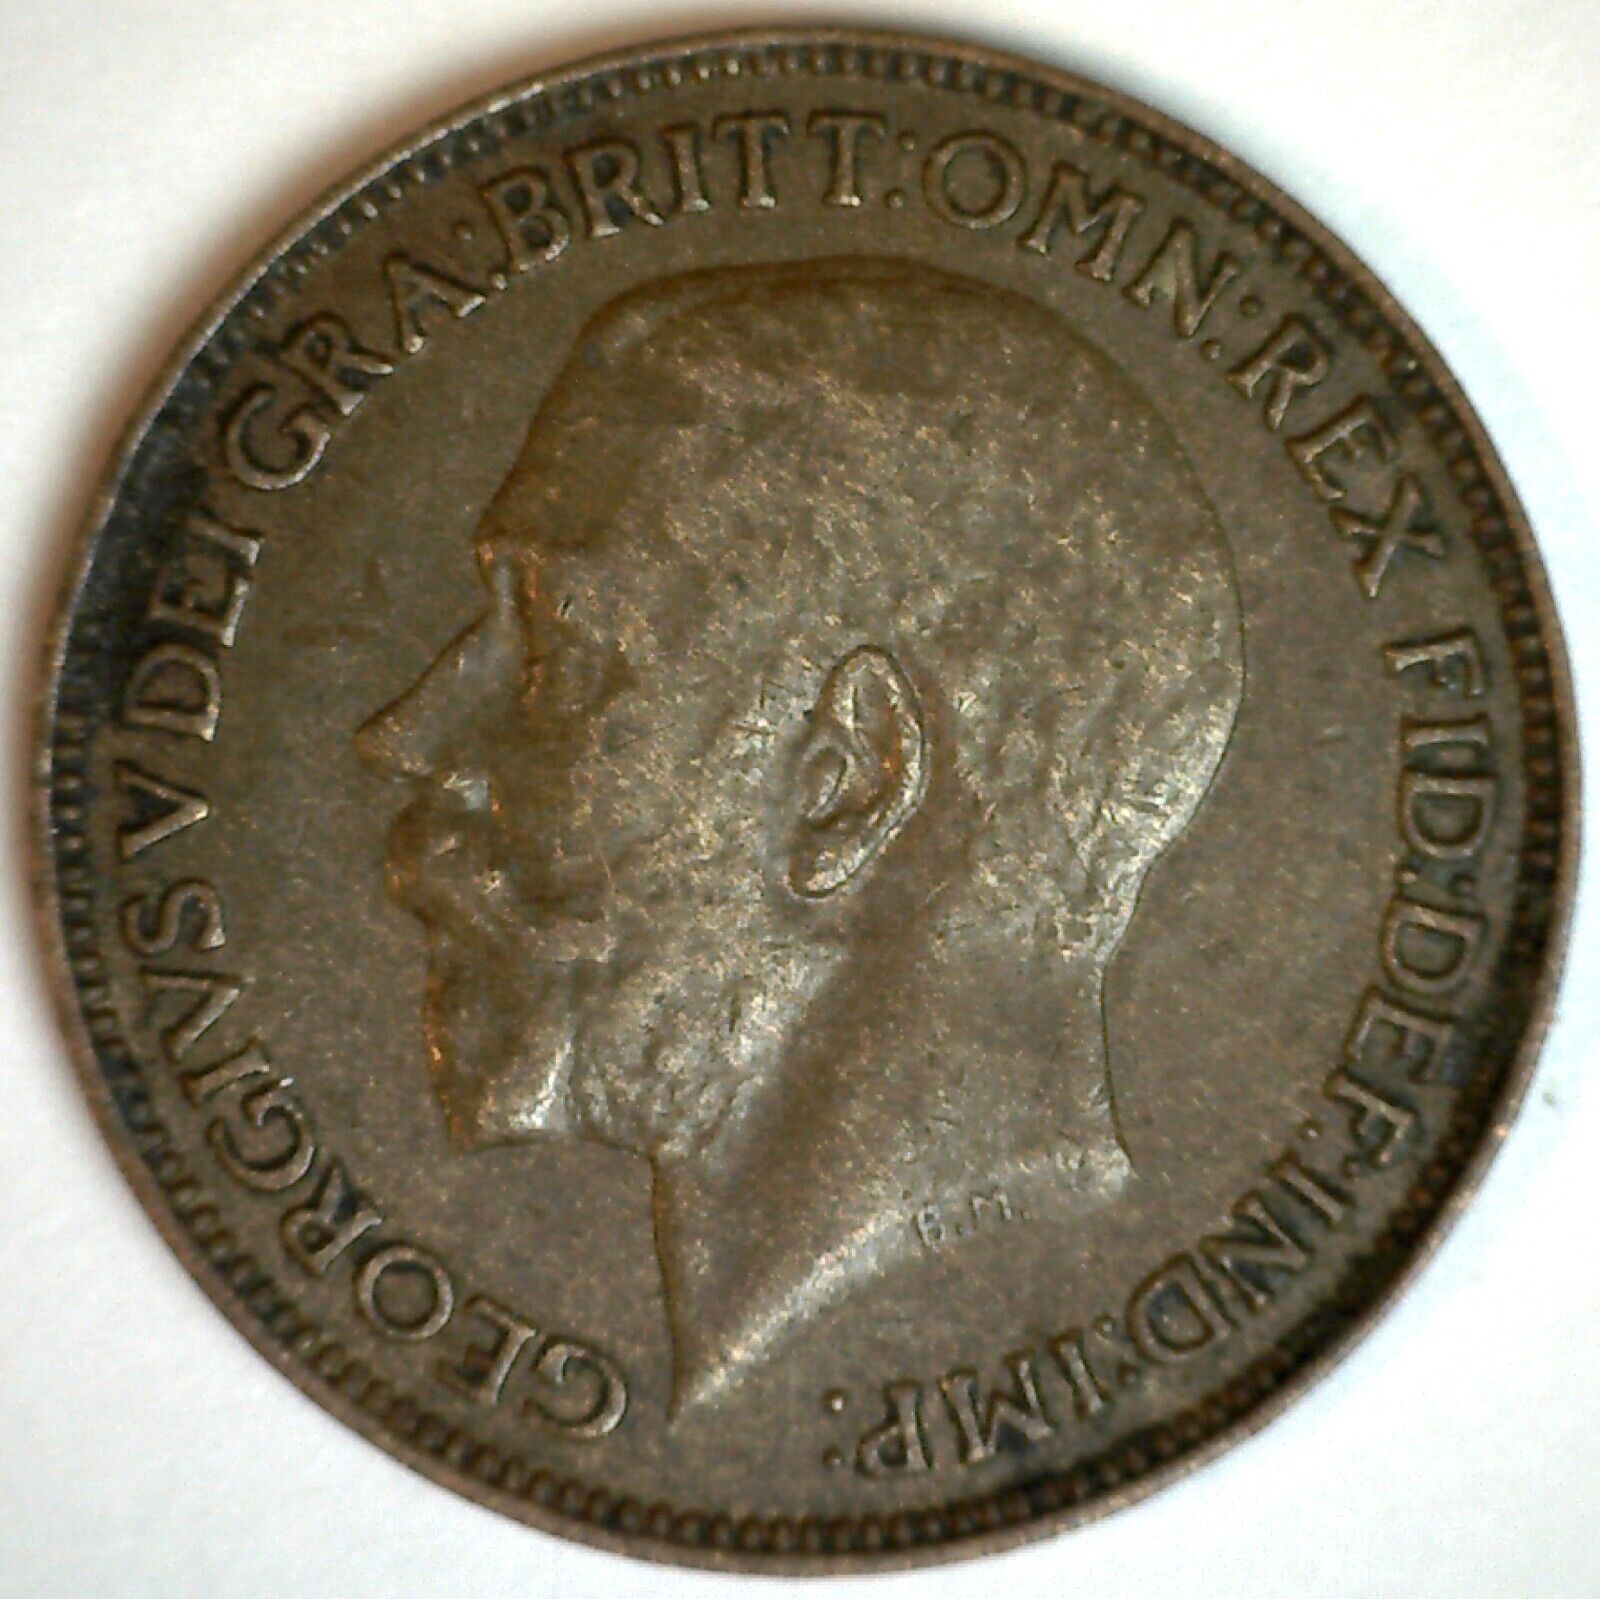 1925 Great Britain Bronze Farthing Coin Circulated Extra Fine George V Britannia